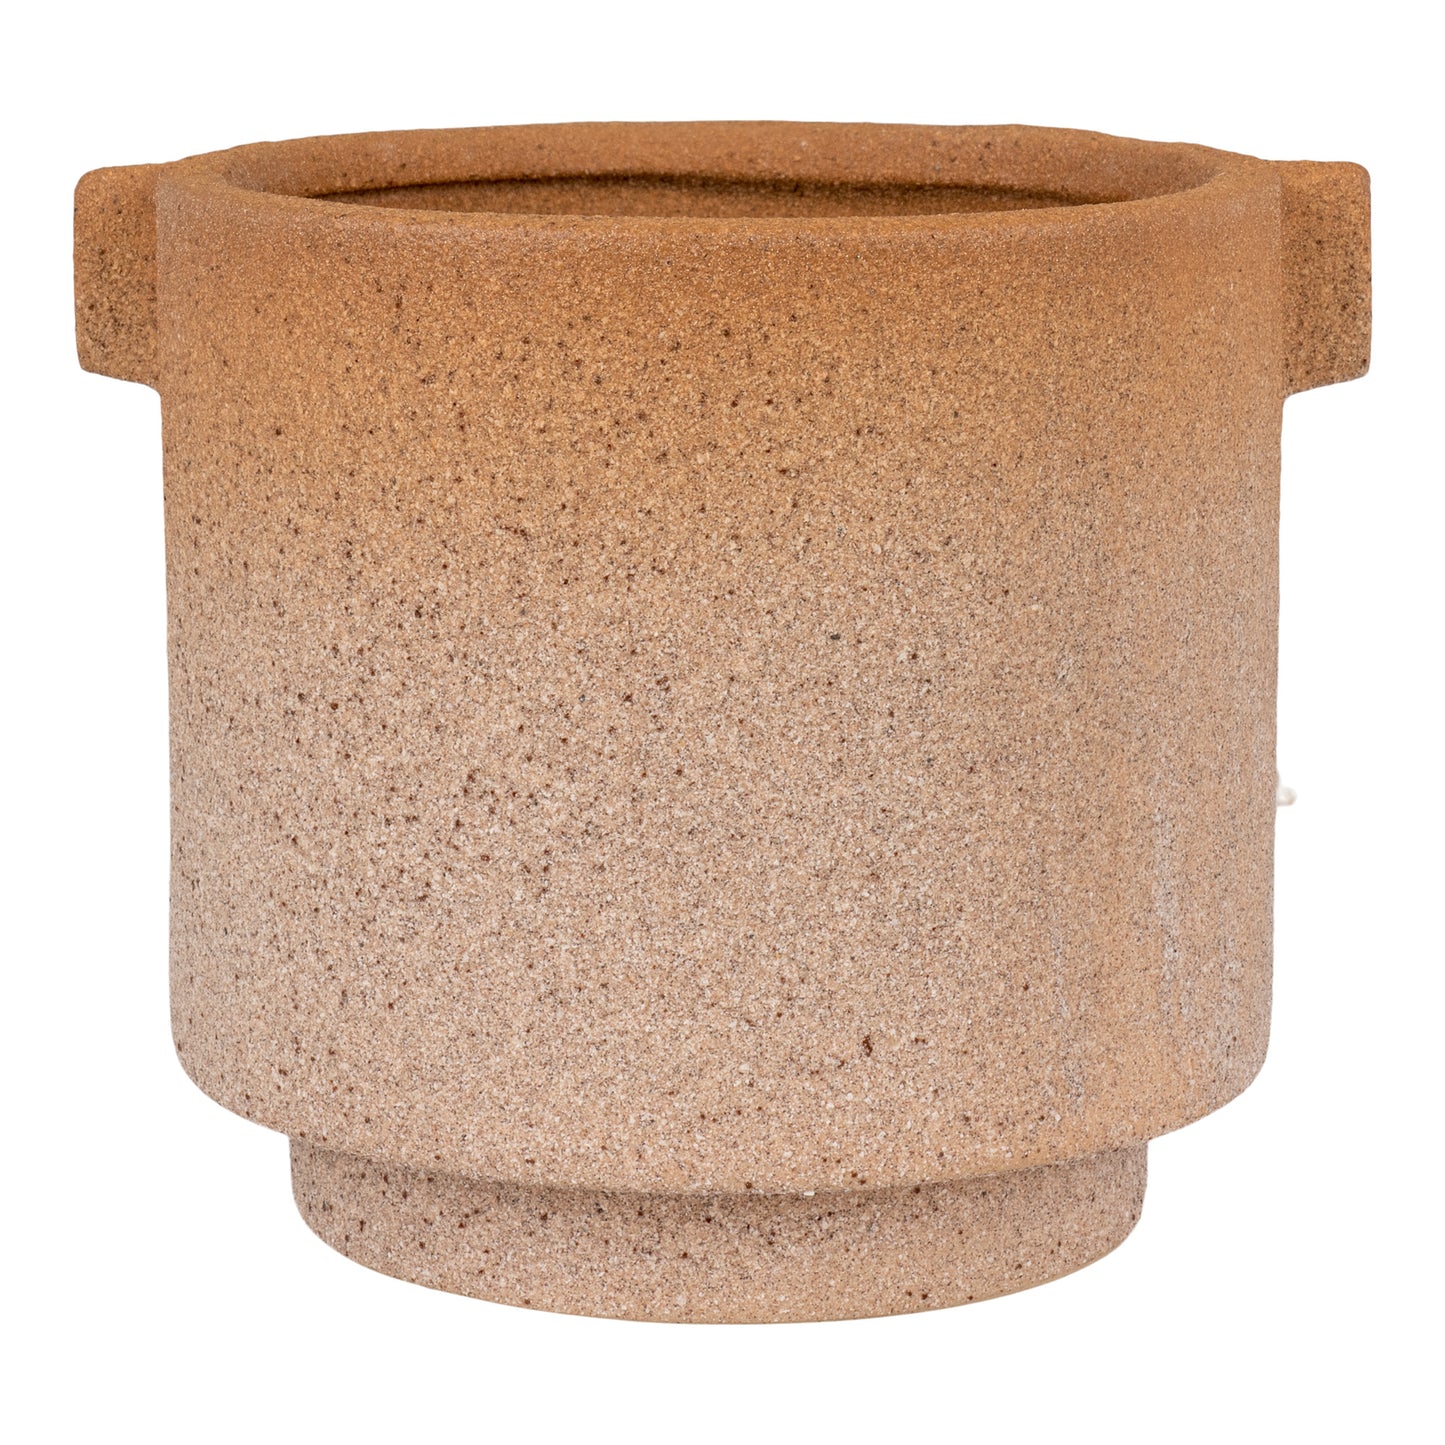 Urtepotte - Urtepotte i keramik, brun, rund, Ø13x13 cm